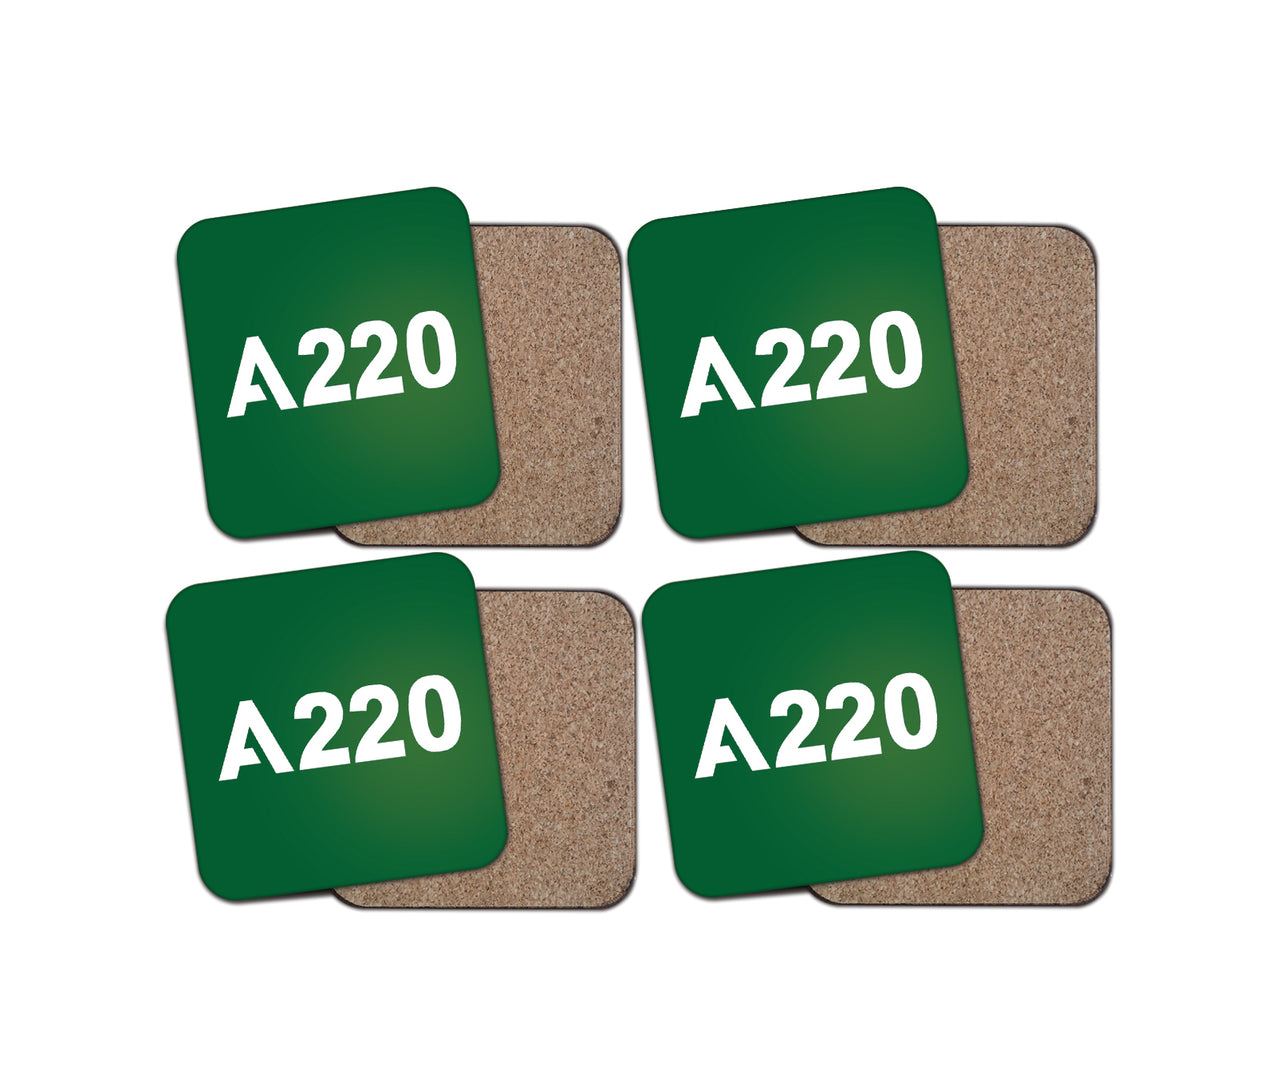 A220 Flat Text Designed Coasters